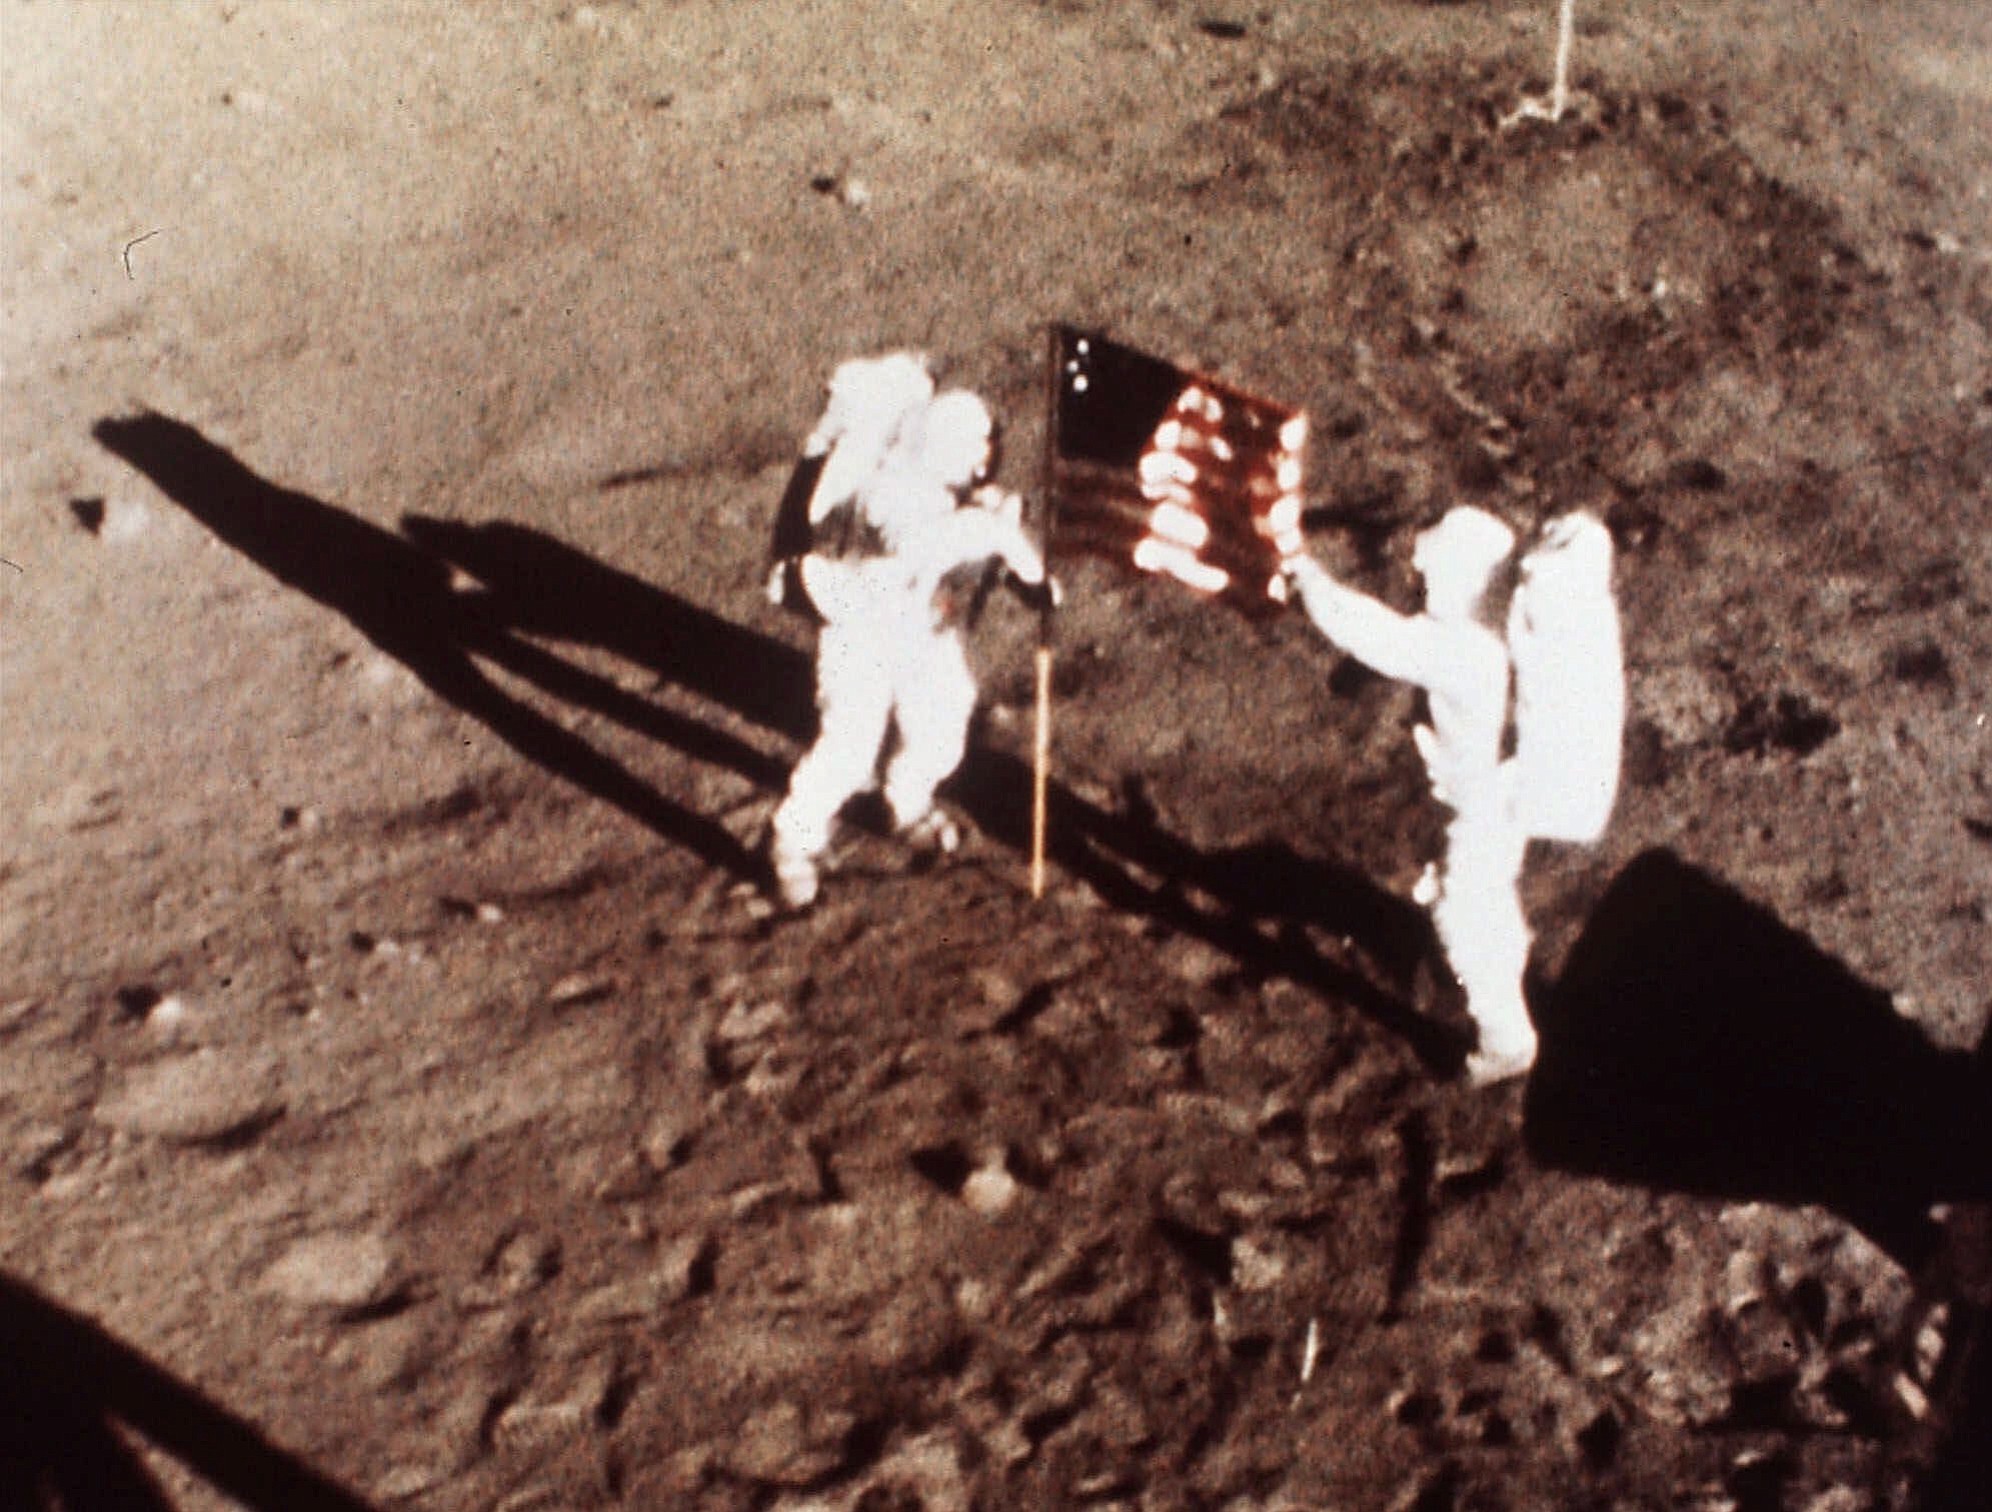 NASA
Apollo 11 astronauts Neil Armstrong and Edwin E. u201cBuzzu201d Aldrin plant the U.S. flag on the lunar surface on July 20, 1969.